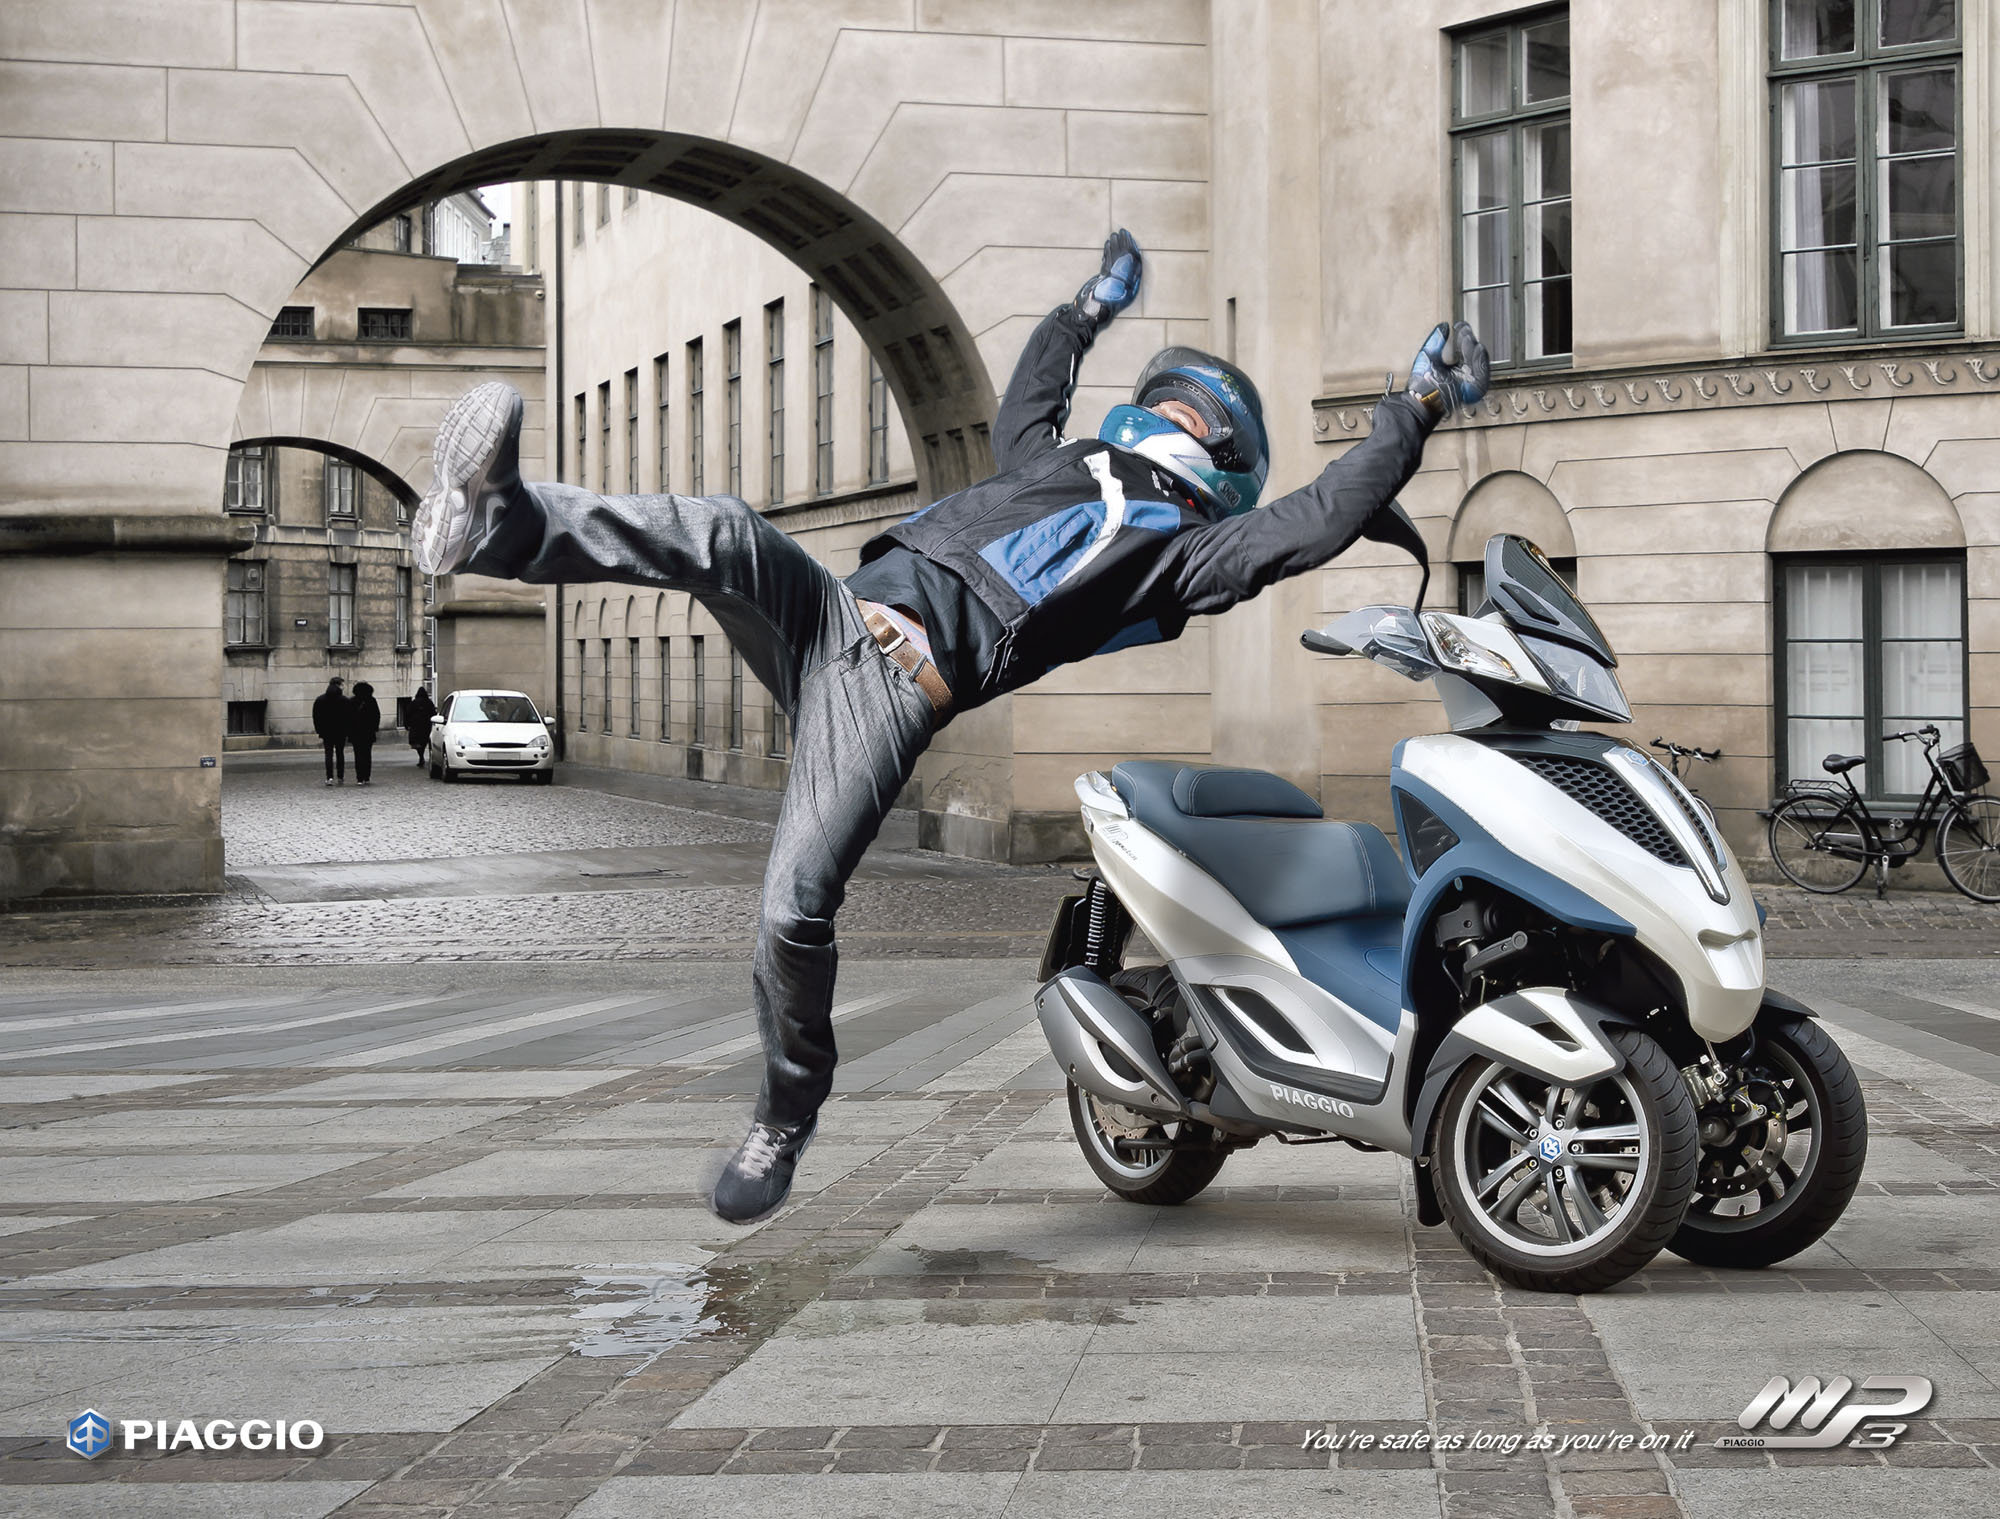 Скутер на час. Реклама мотоциклов. Креативная реклама мотоциклов. Рекламный мотоцикл. Мотоцикл из рекламы.